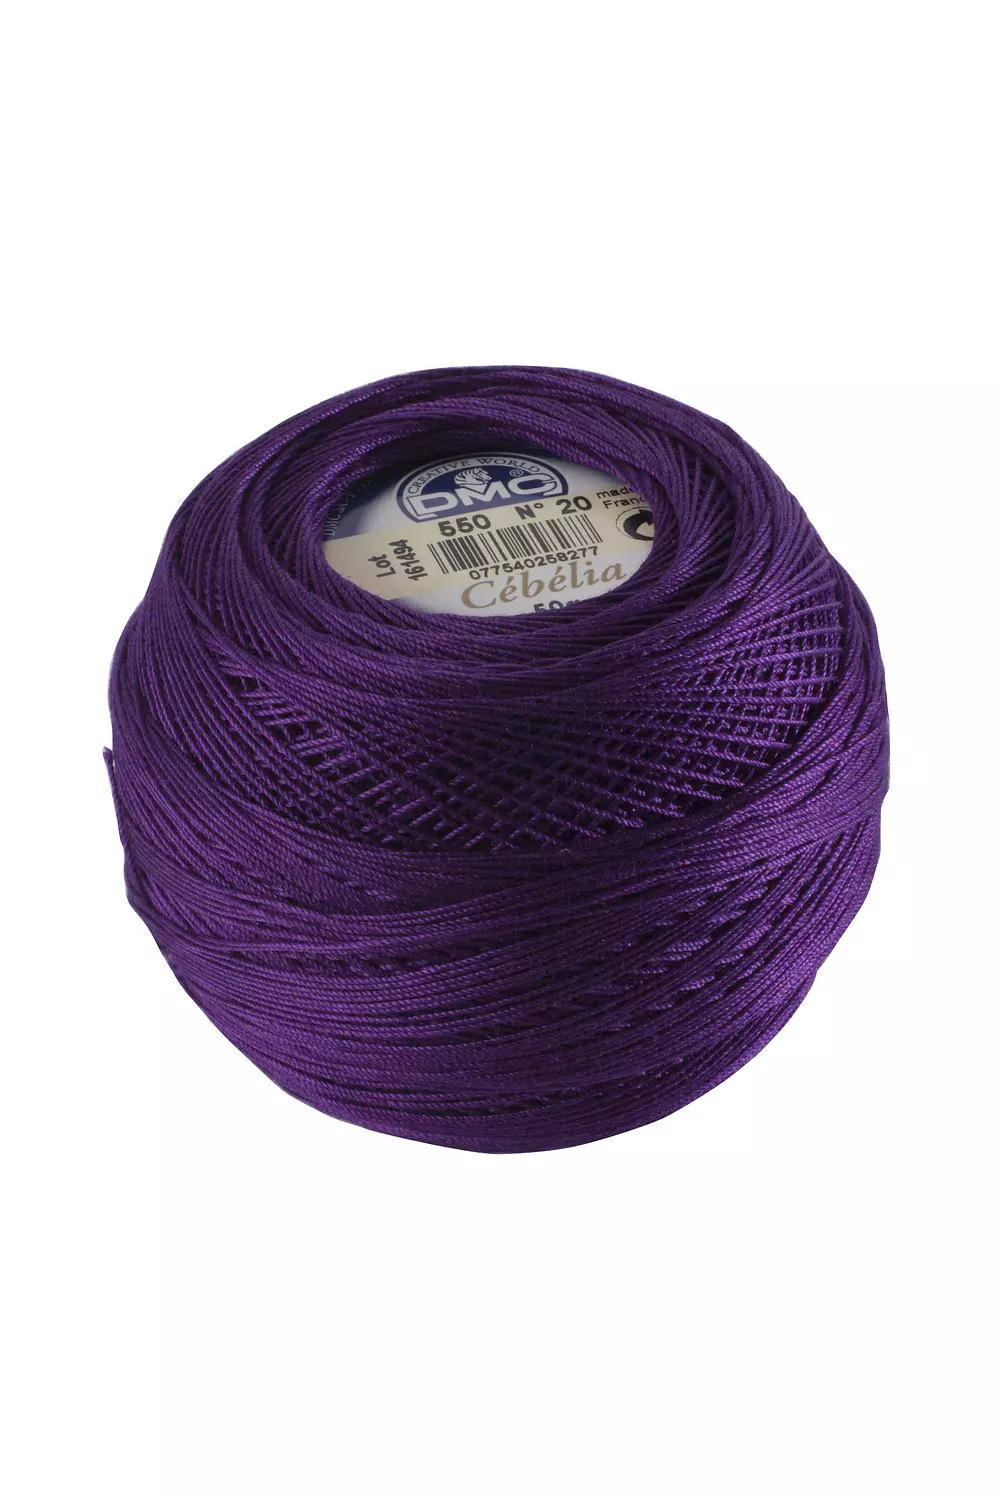 !Cebelia Crochet Thread Size 10 - Light Beige (Color #3033) - FULL BAG SALE  (10 Skeins)